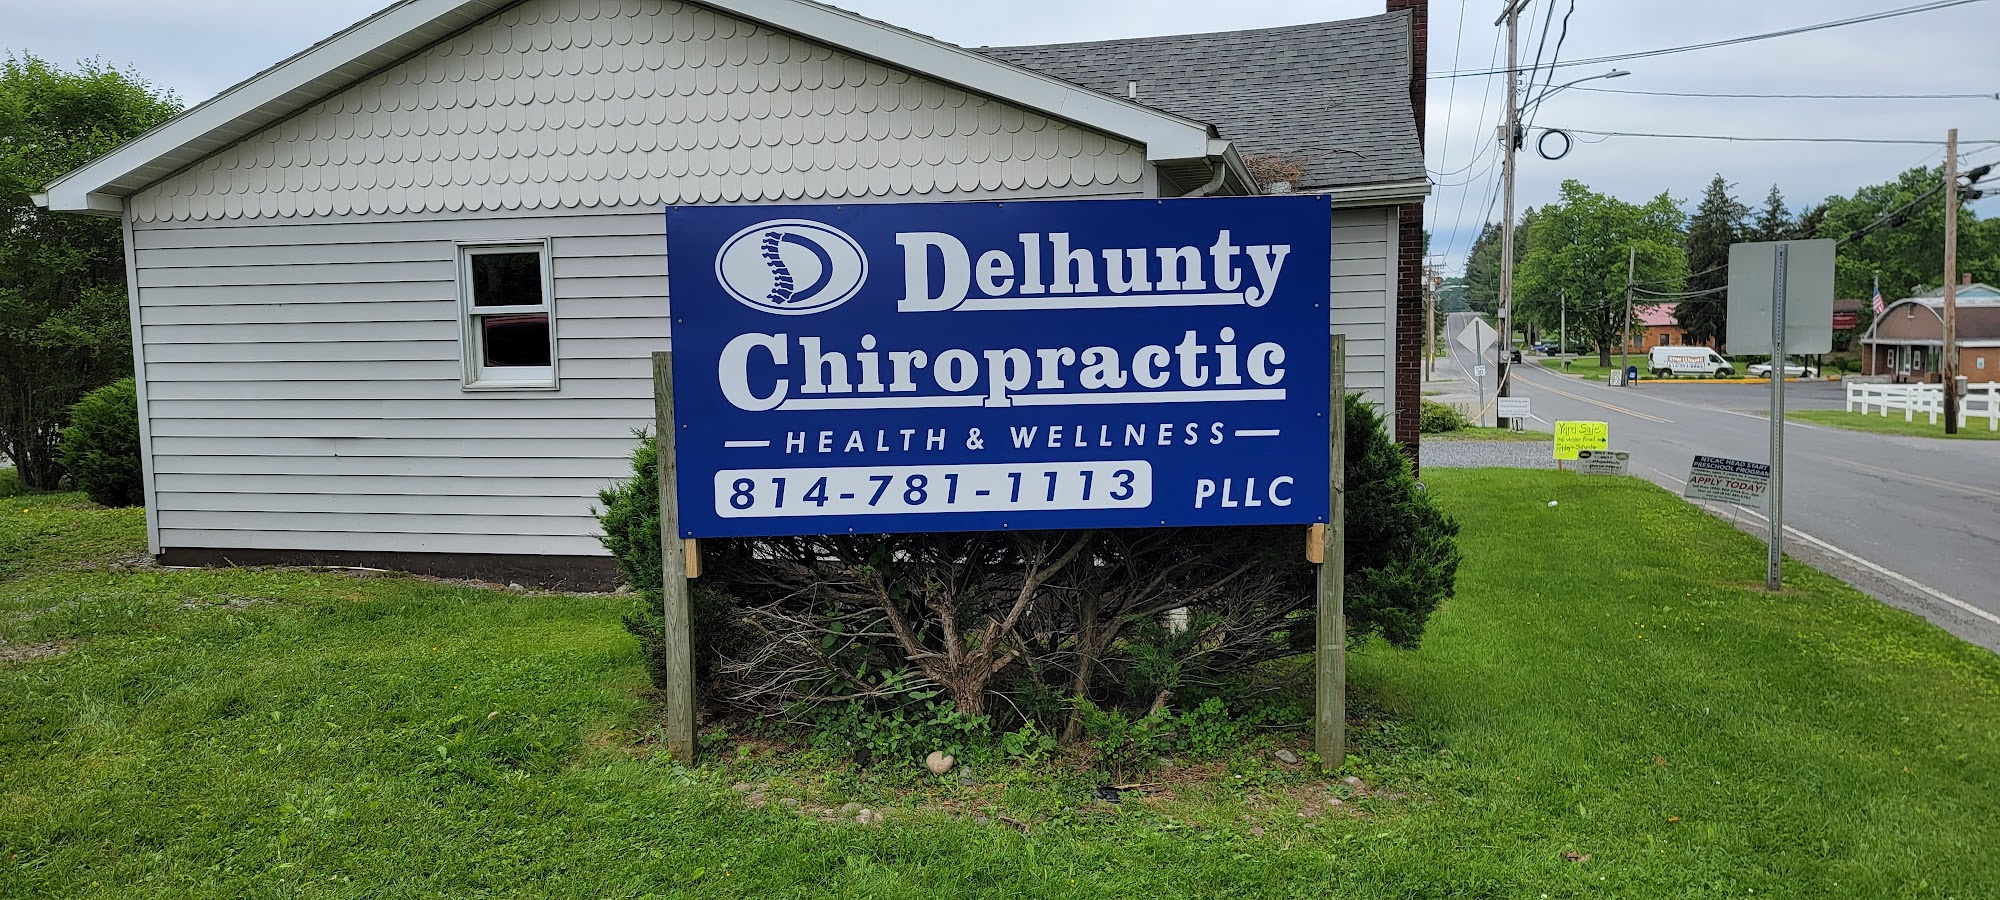 Delhunty Chiropractic Health & Wellness, PLLC. 801 S Michael Rd, St Marys Pennsylvania 15857